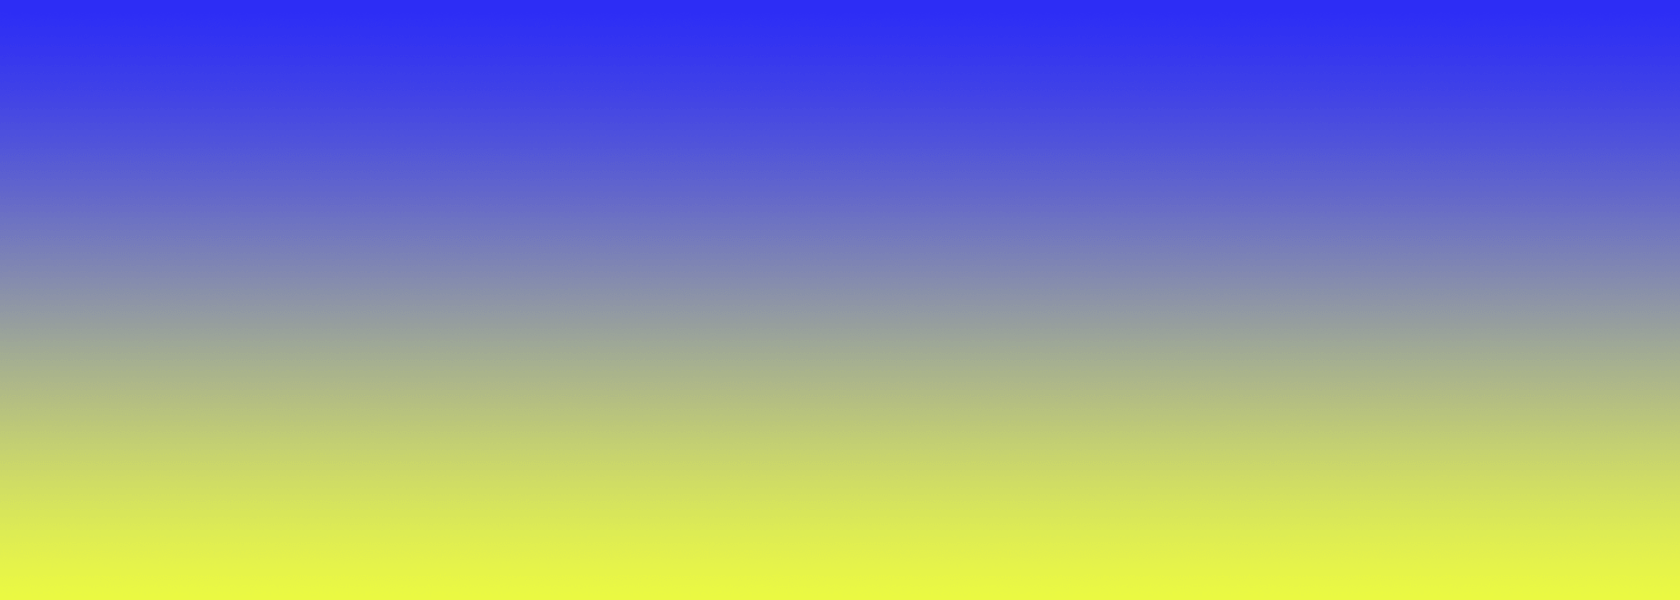 yellow-blue-background-min